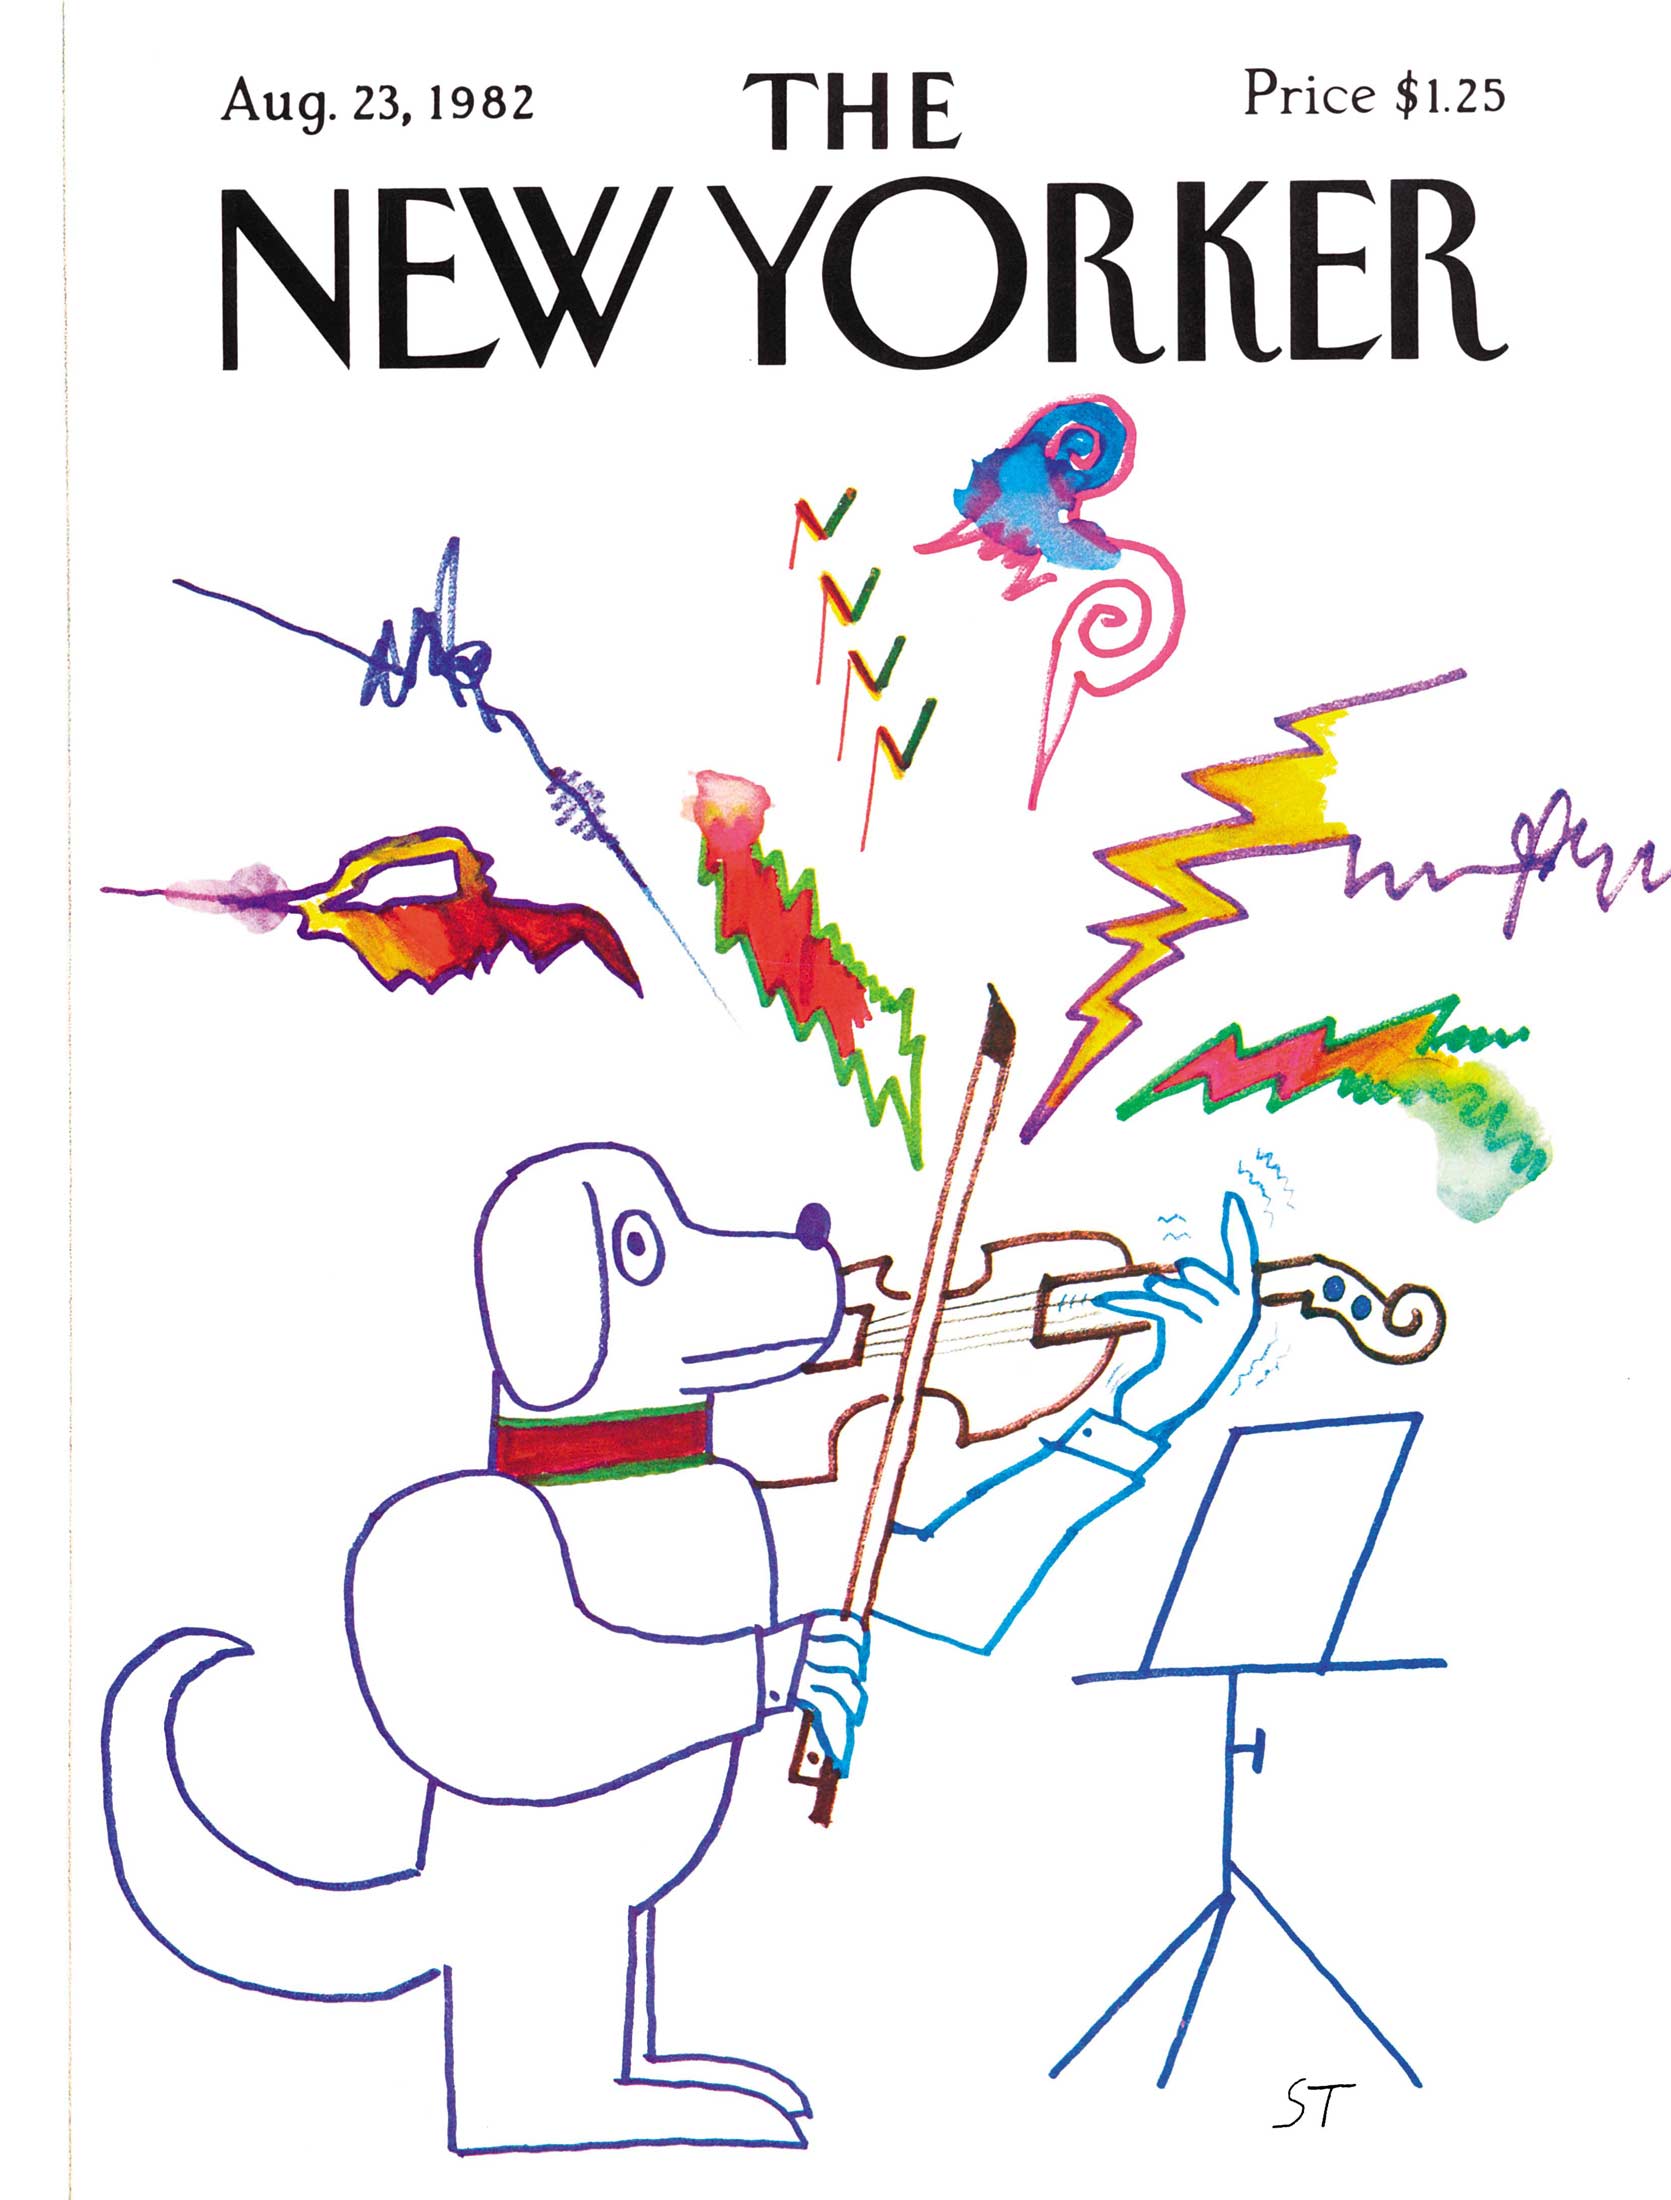 Cover of <em>The New Yorker</em>, August 23, 1982.